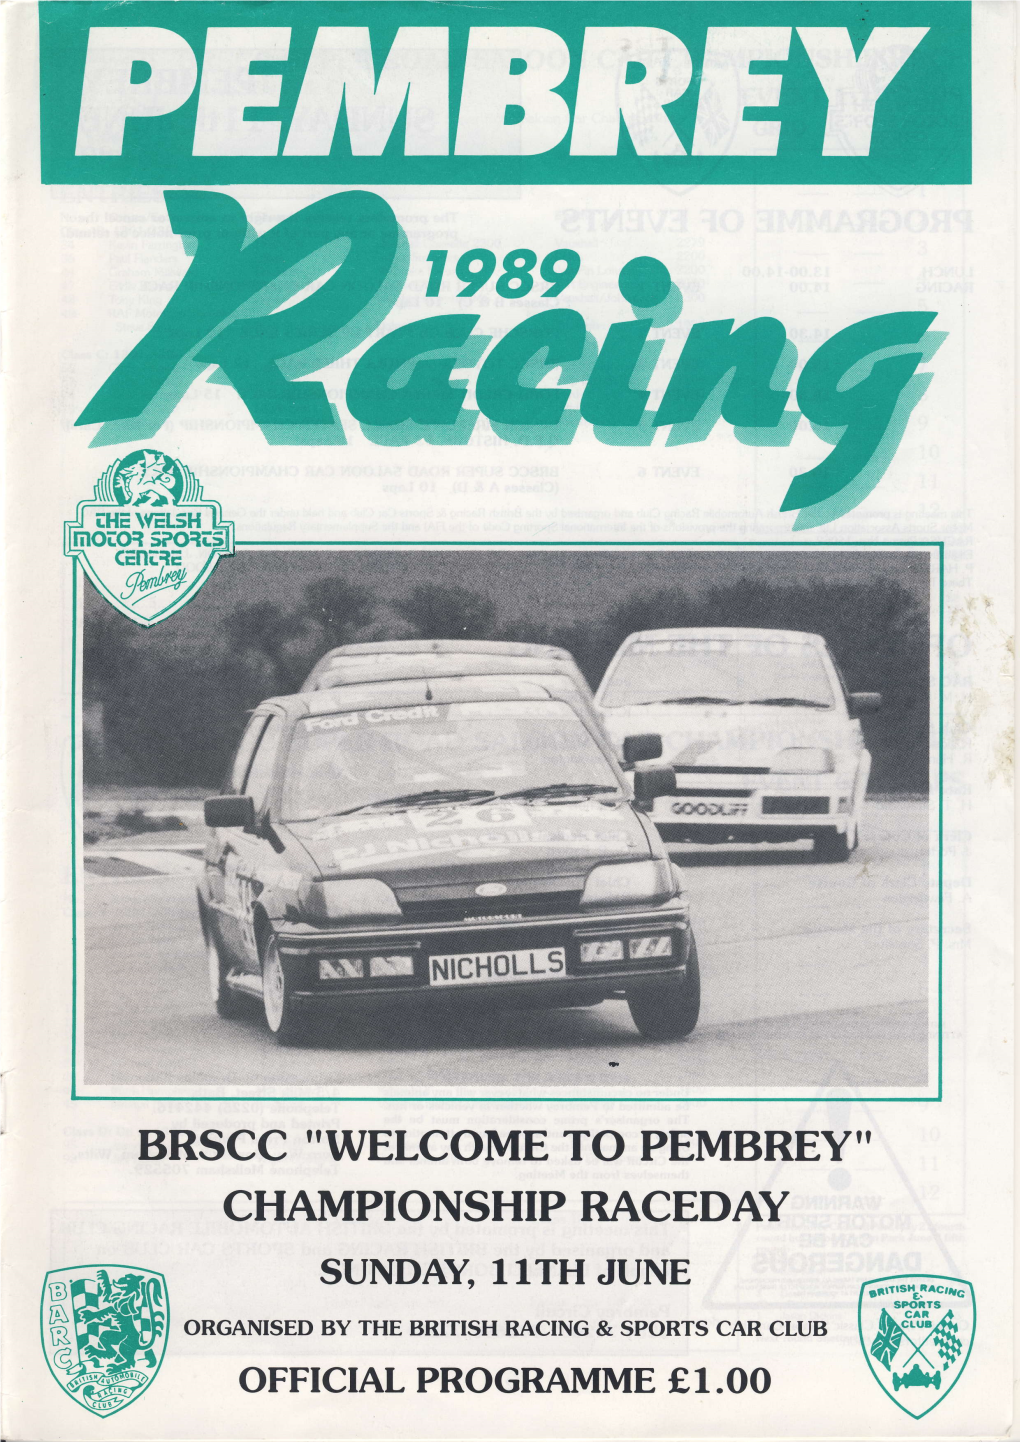 Brscc ''Welcome to Pembrey'' Championship Raceday